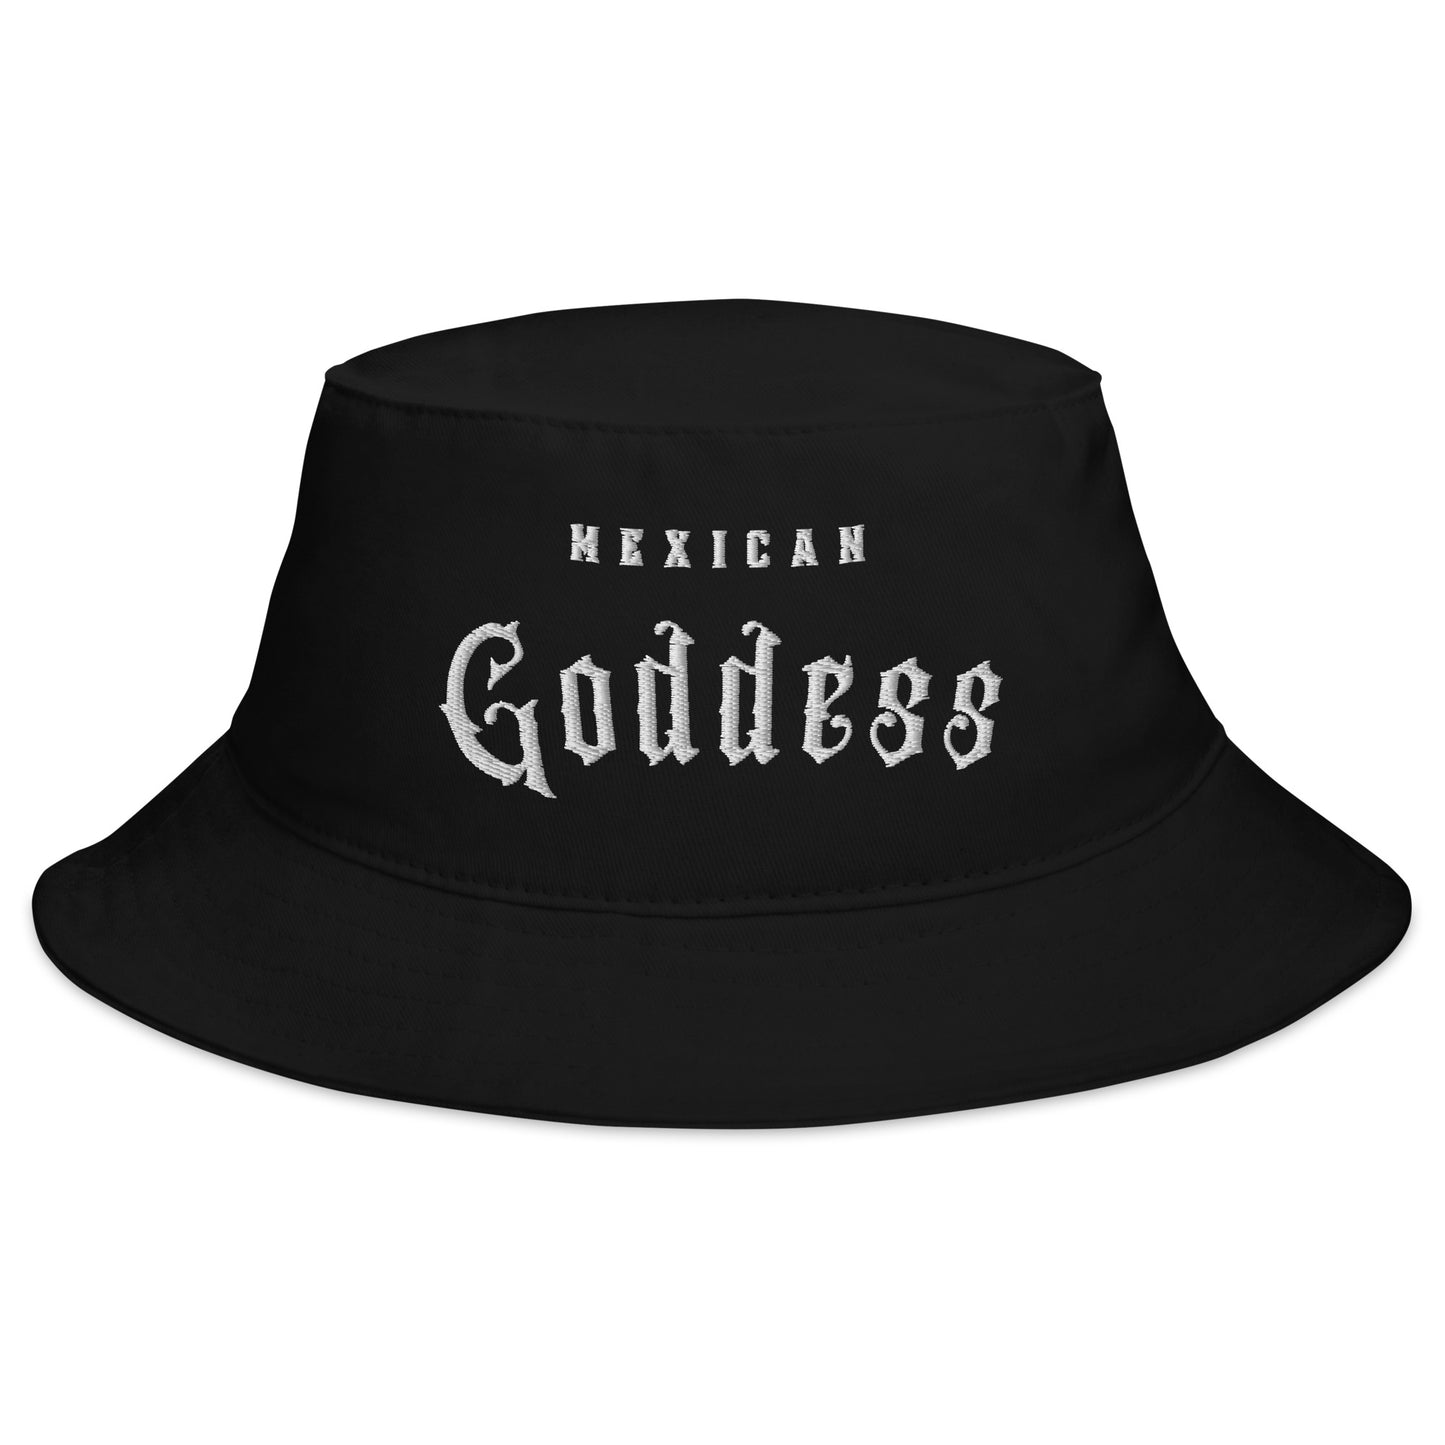 "Mexican Goddess" Bucket Hat